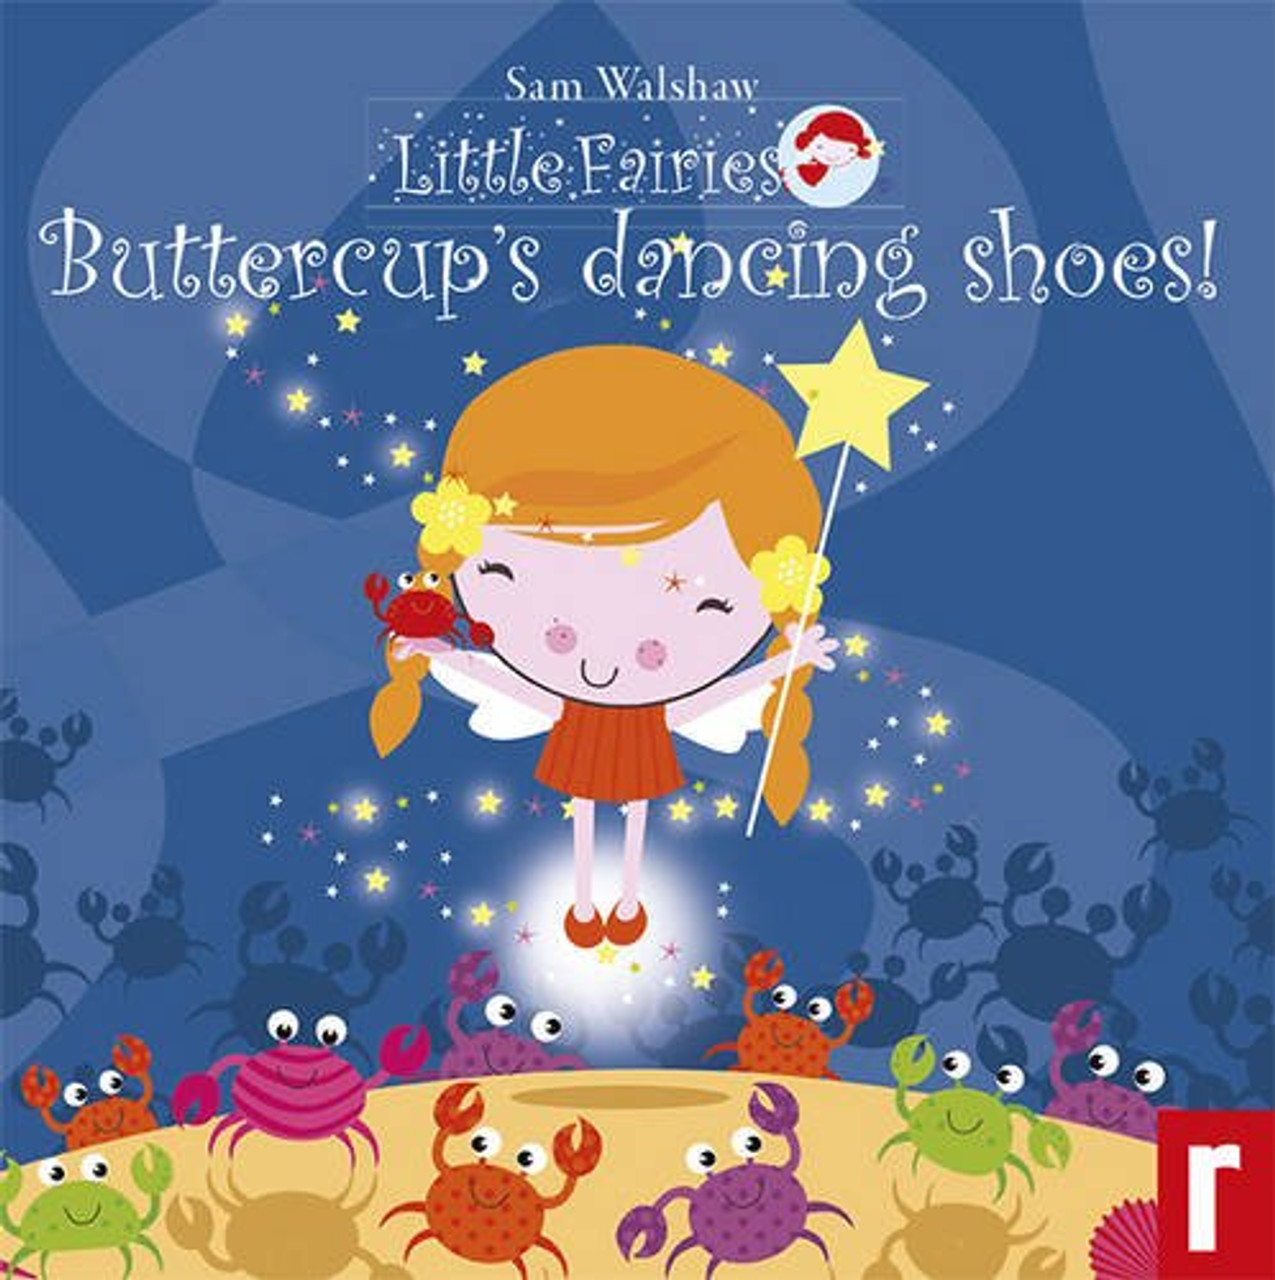 Sam Walshaw / Buttercups Dancing Shoes: Little Fairies (Children's Picture Book)